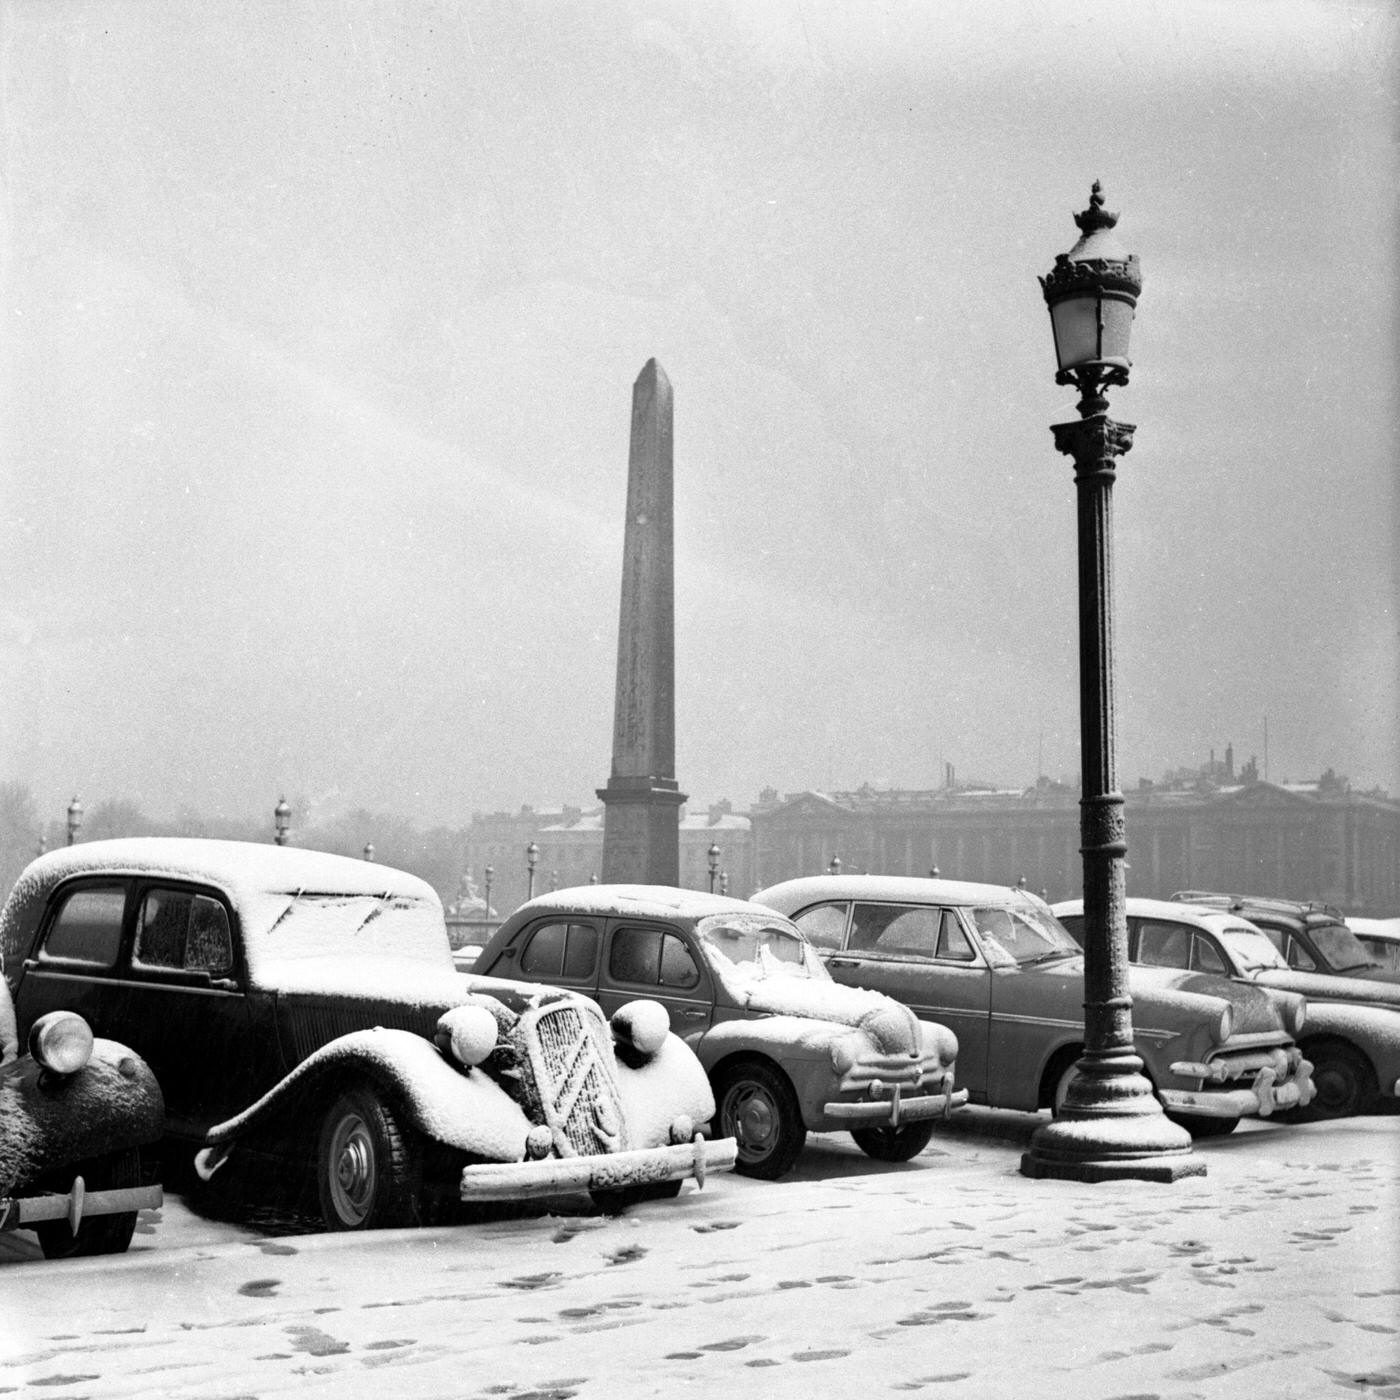 Car Covered In Snow At Place de la Concorde, Paris, January 13, 1955.